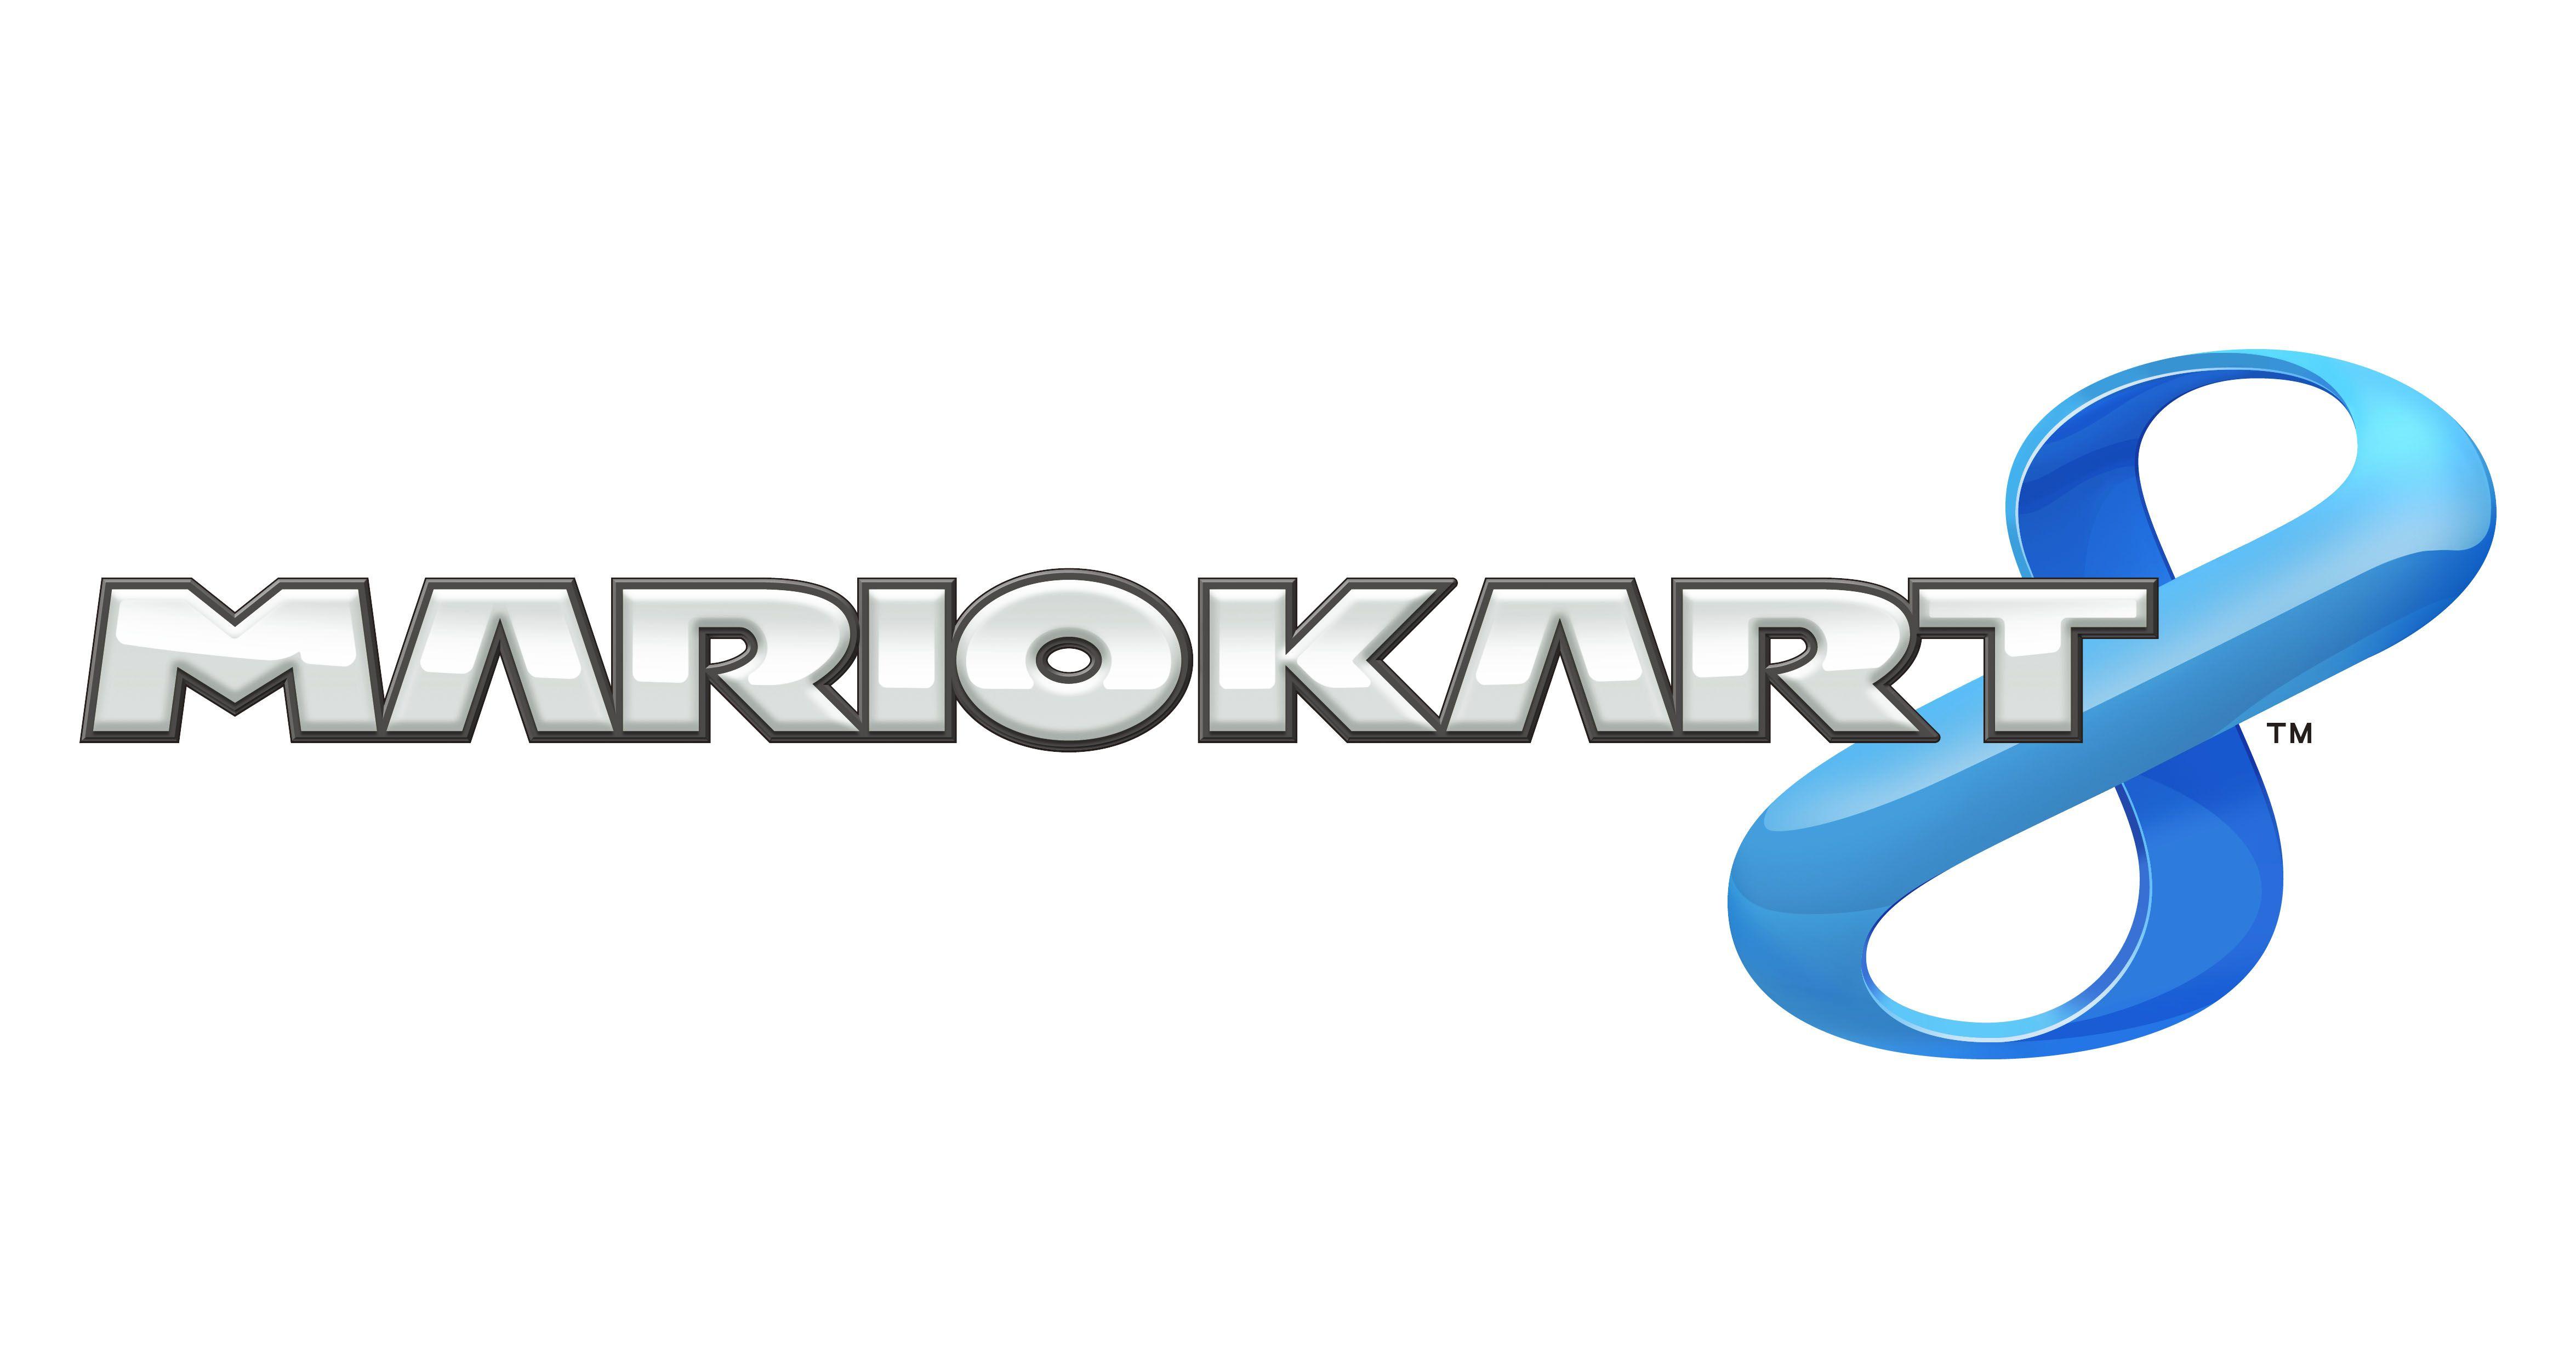 Link U Logo - Mario Kart 8 limited edition nintendo wii u logo | GOOD GAMES :3